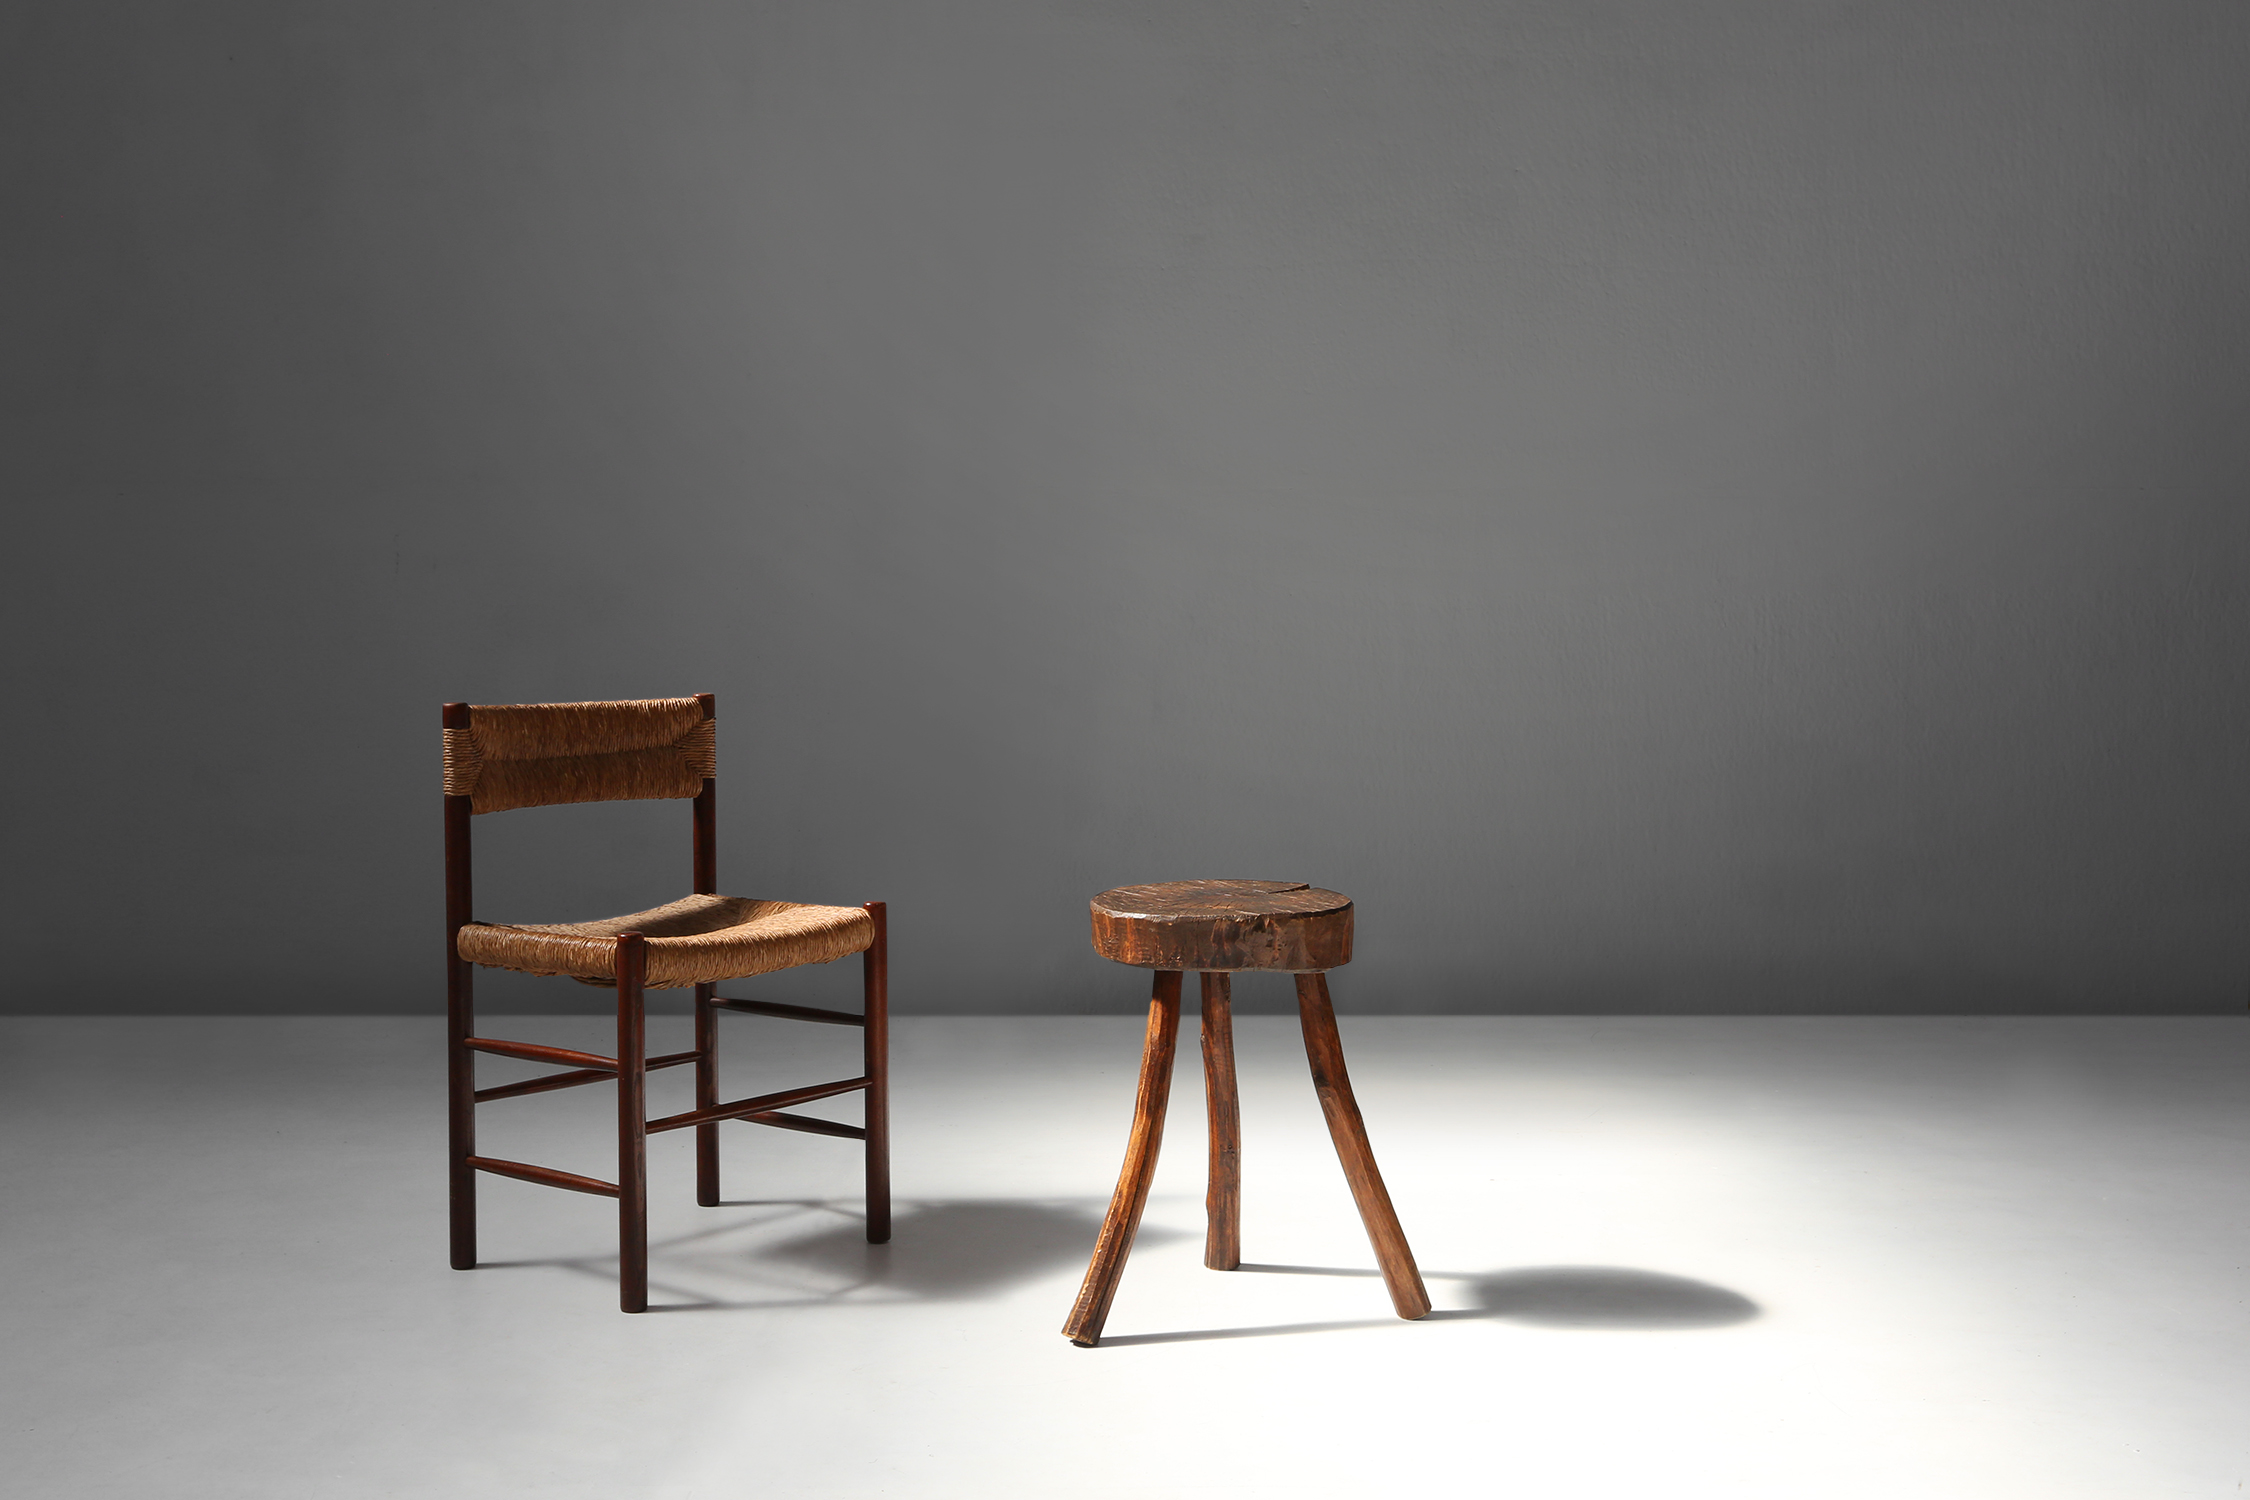 Rustic wooden stool 19th centurythumbnail